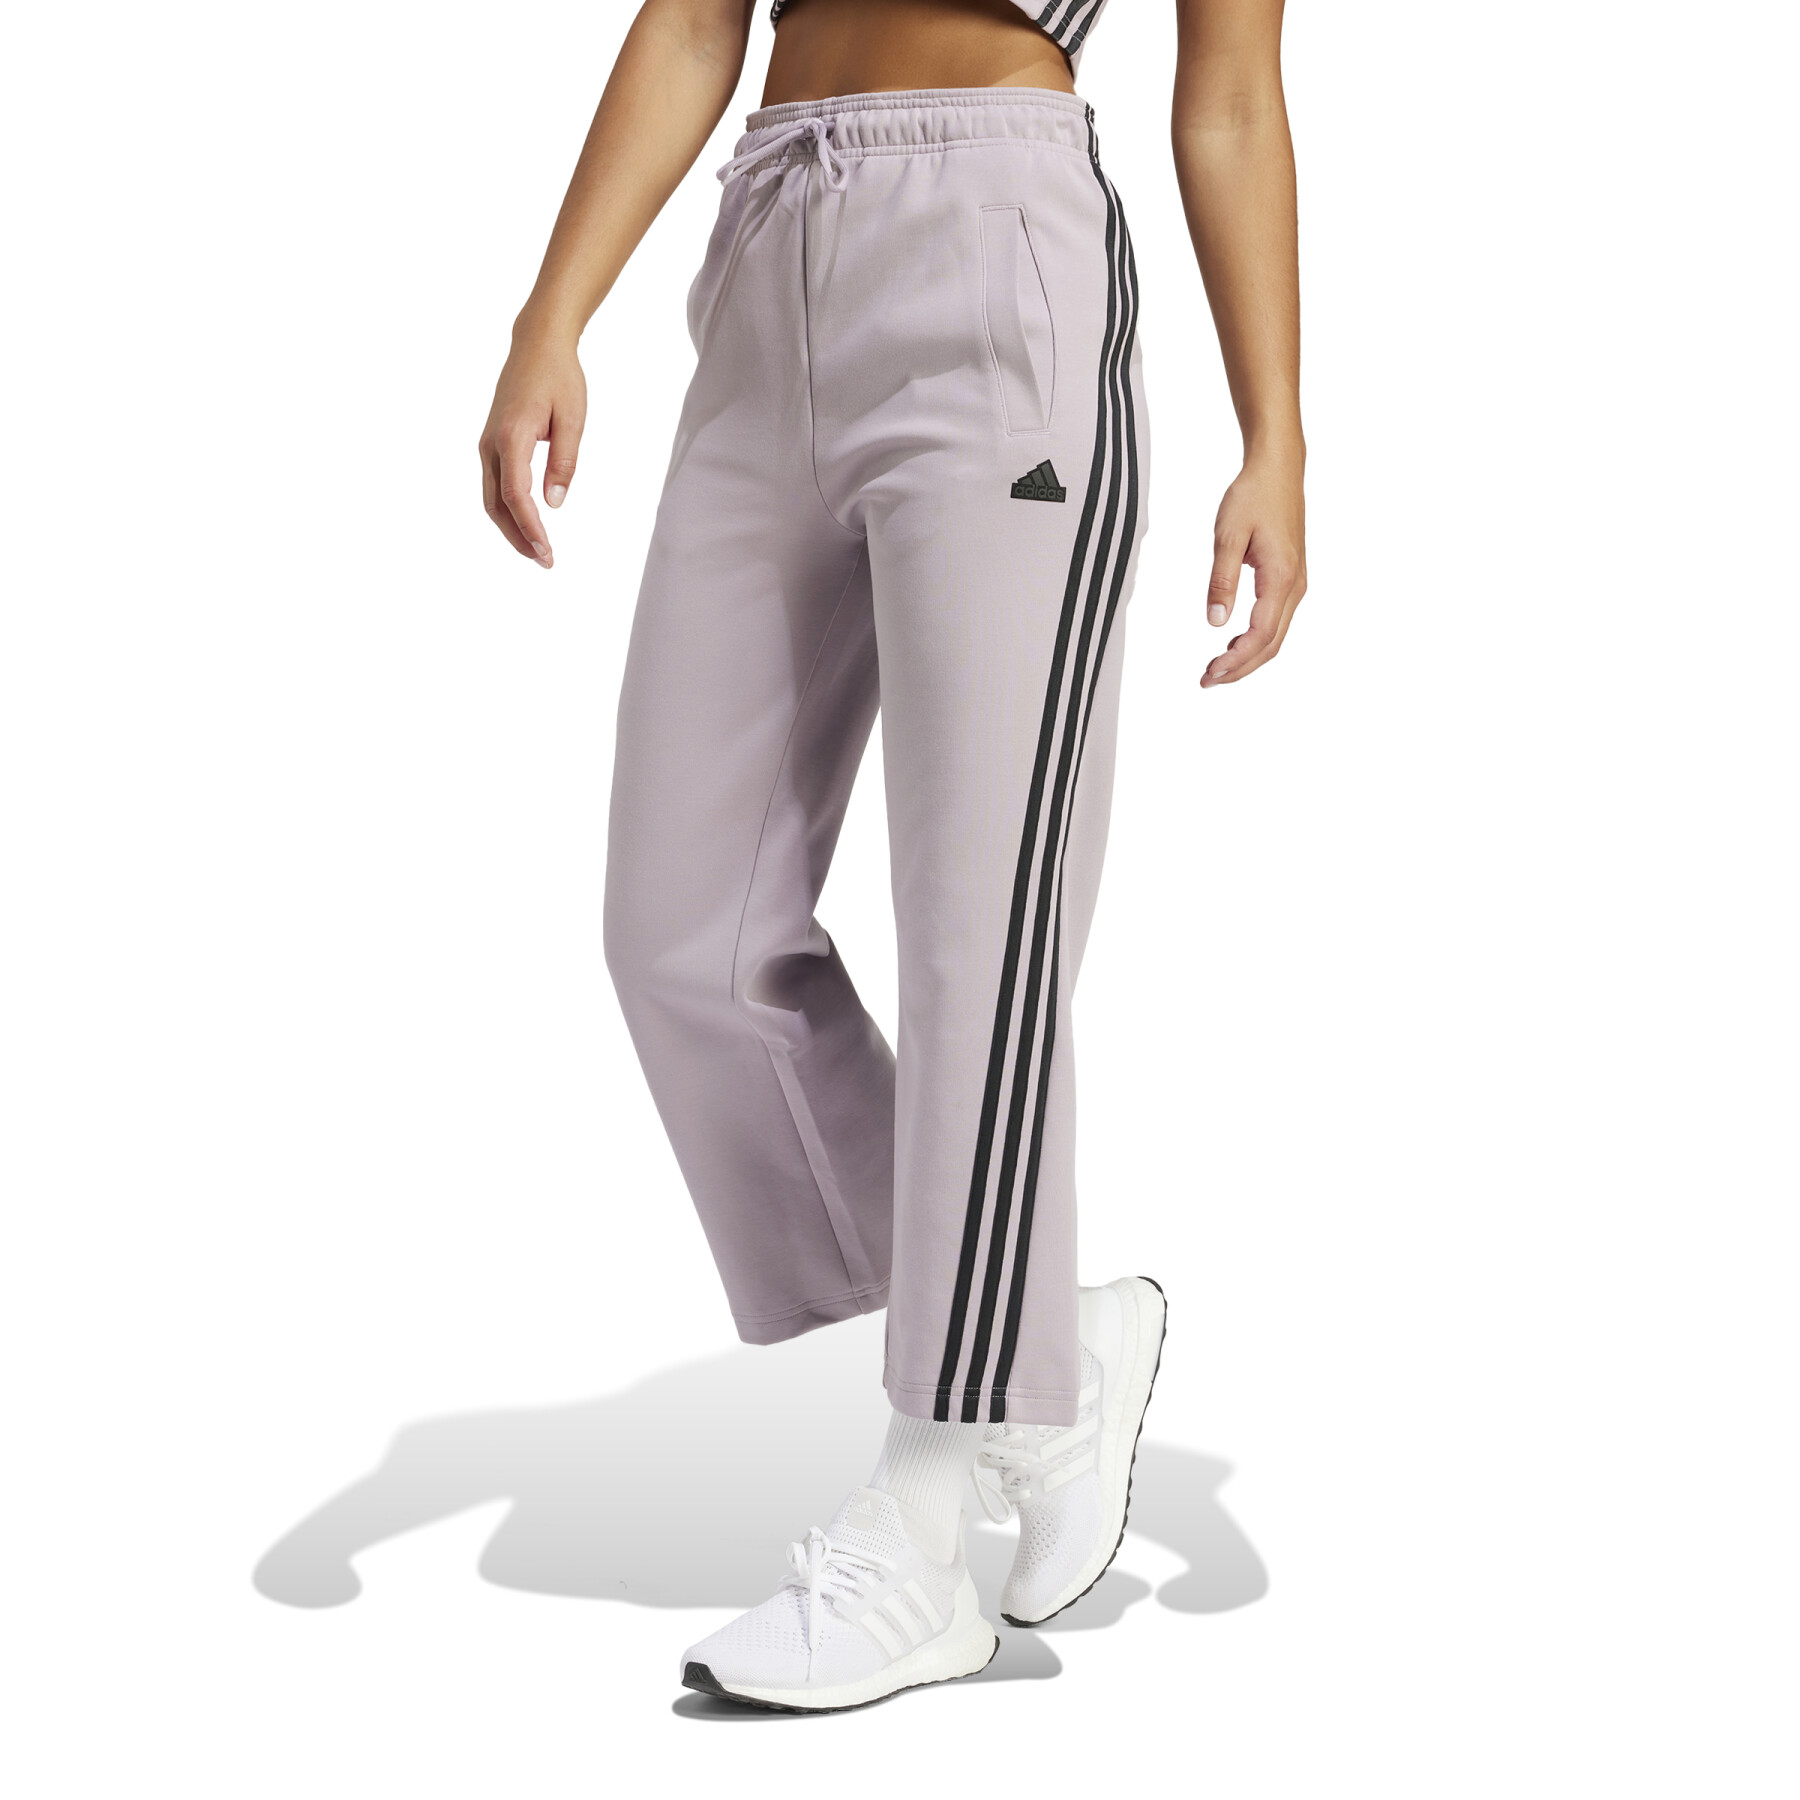 jogging Icons - Lifestyle 3 Brands Future suit - Open Stripes adidas Women\'s - adidas Hem